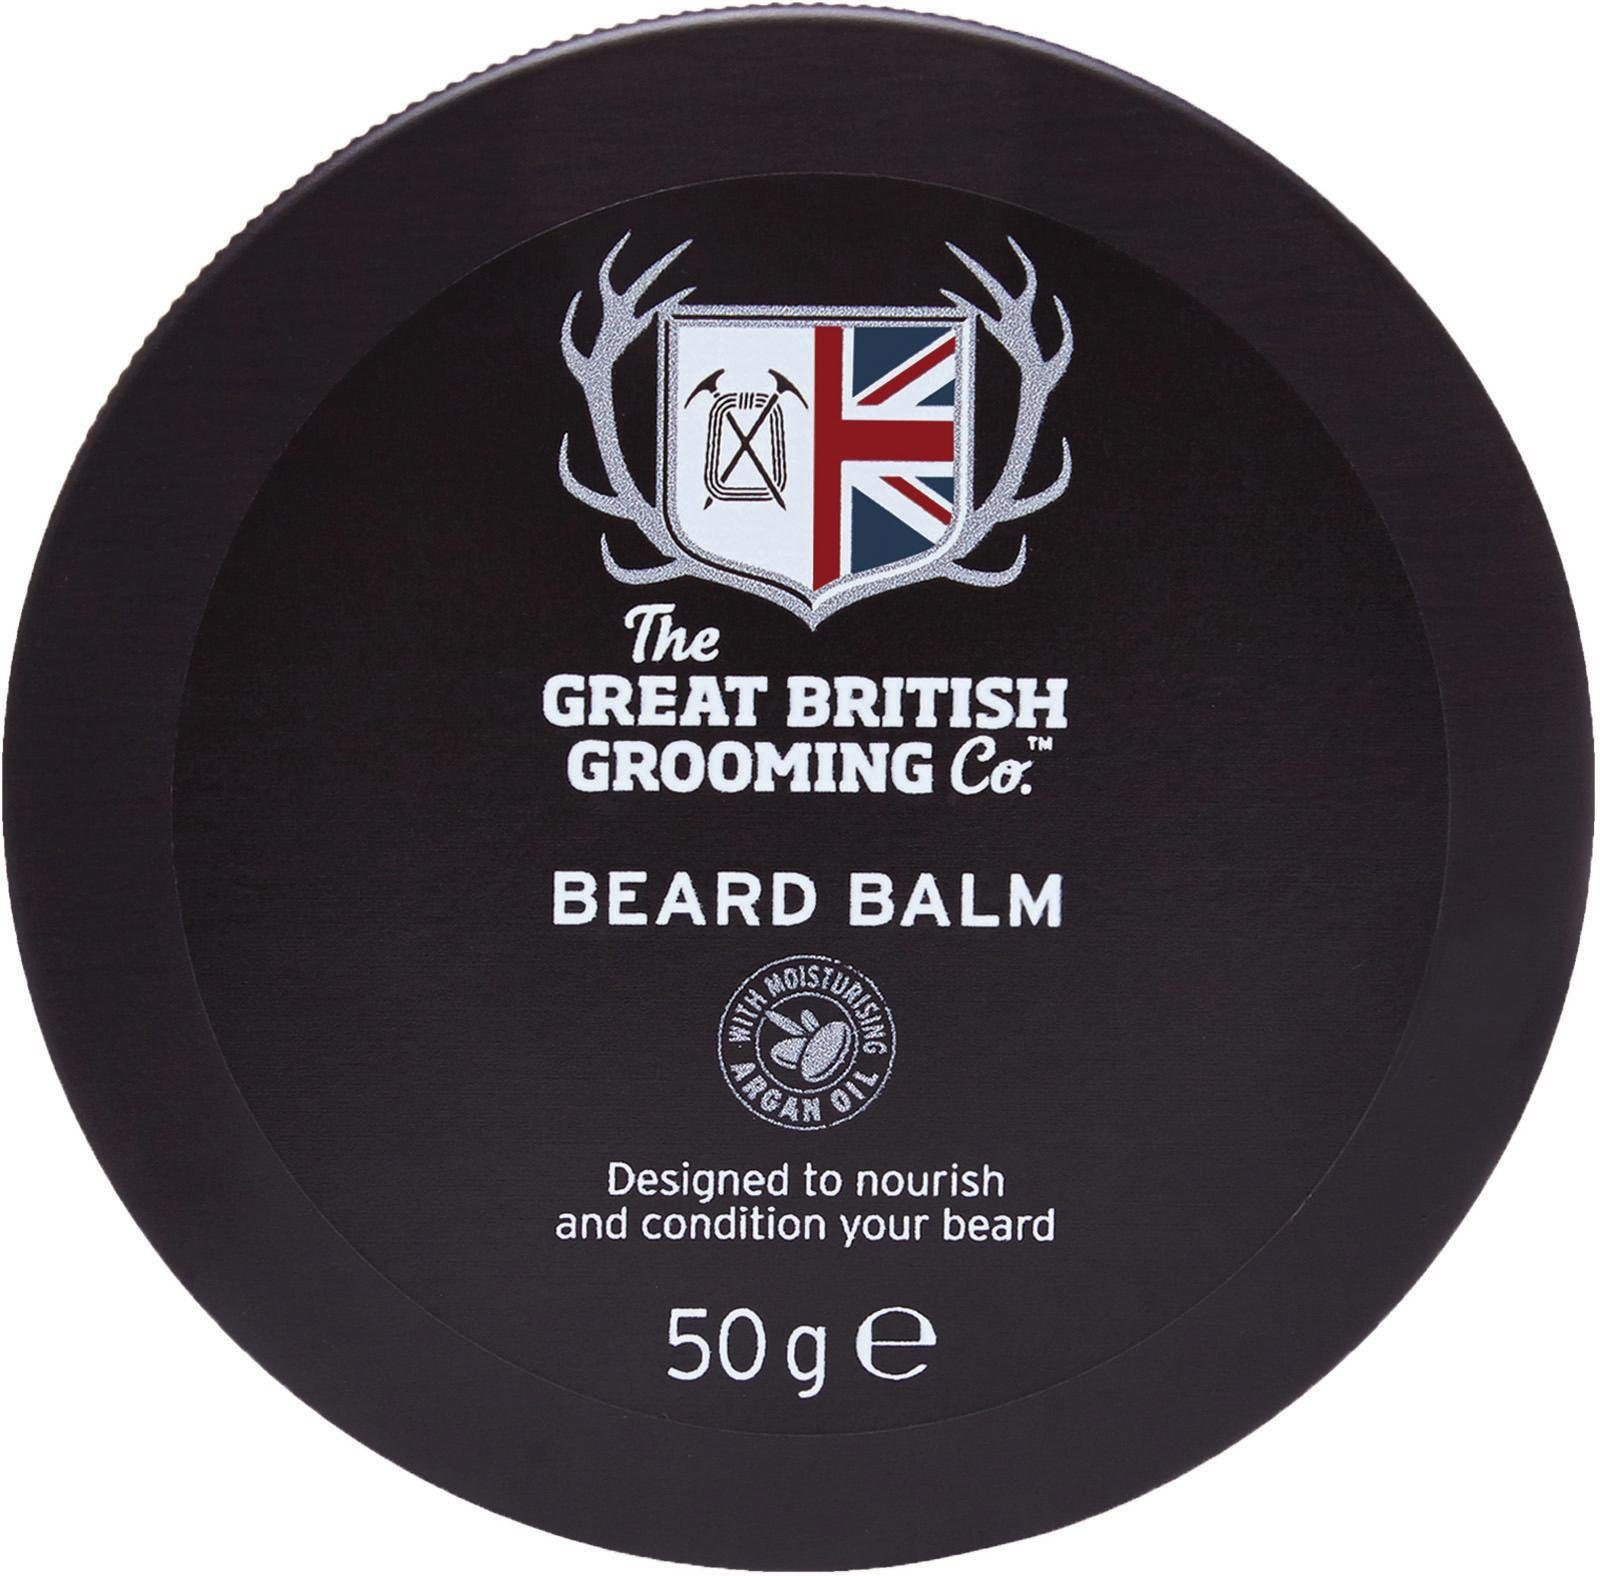 The Great British Bartbalsam Balsam Grooming Beard Co